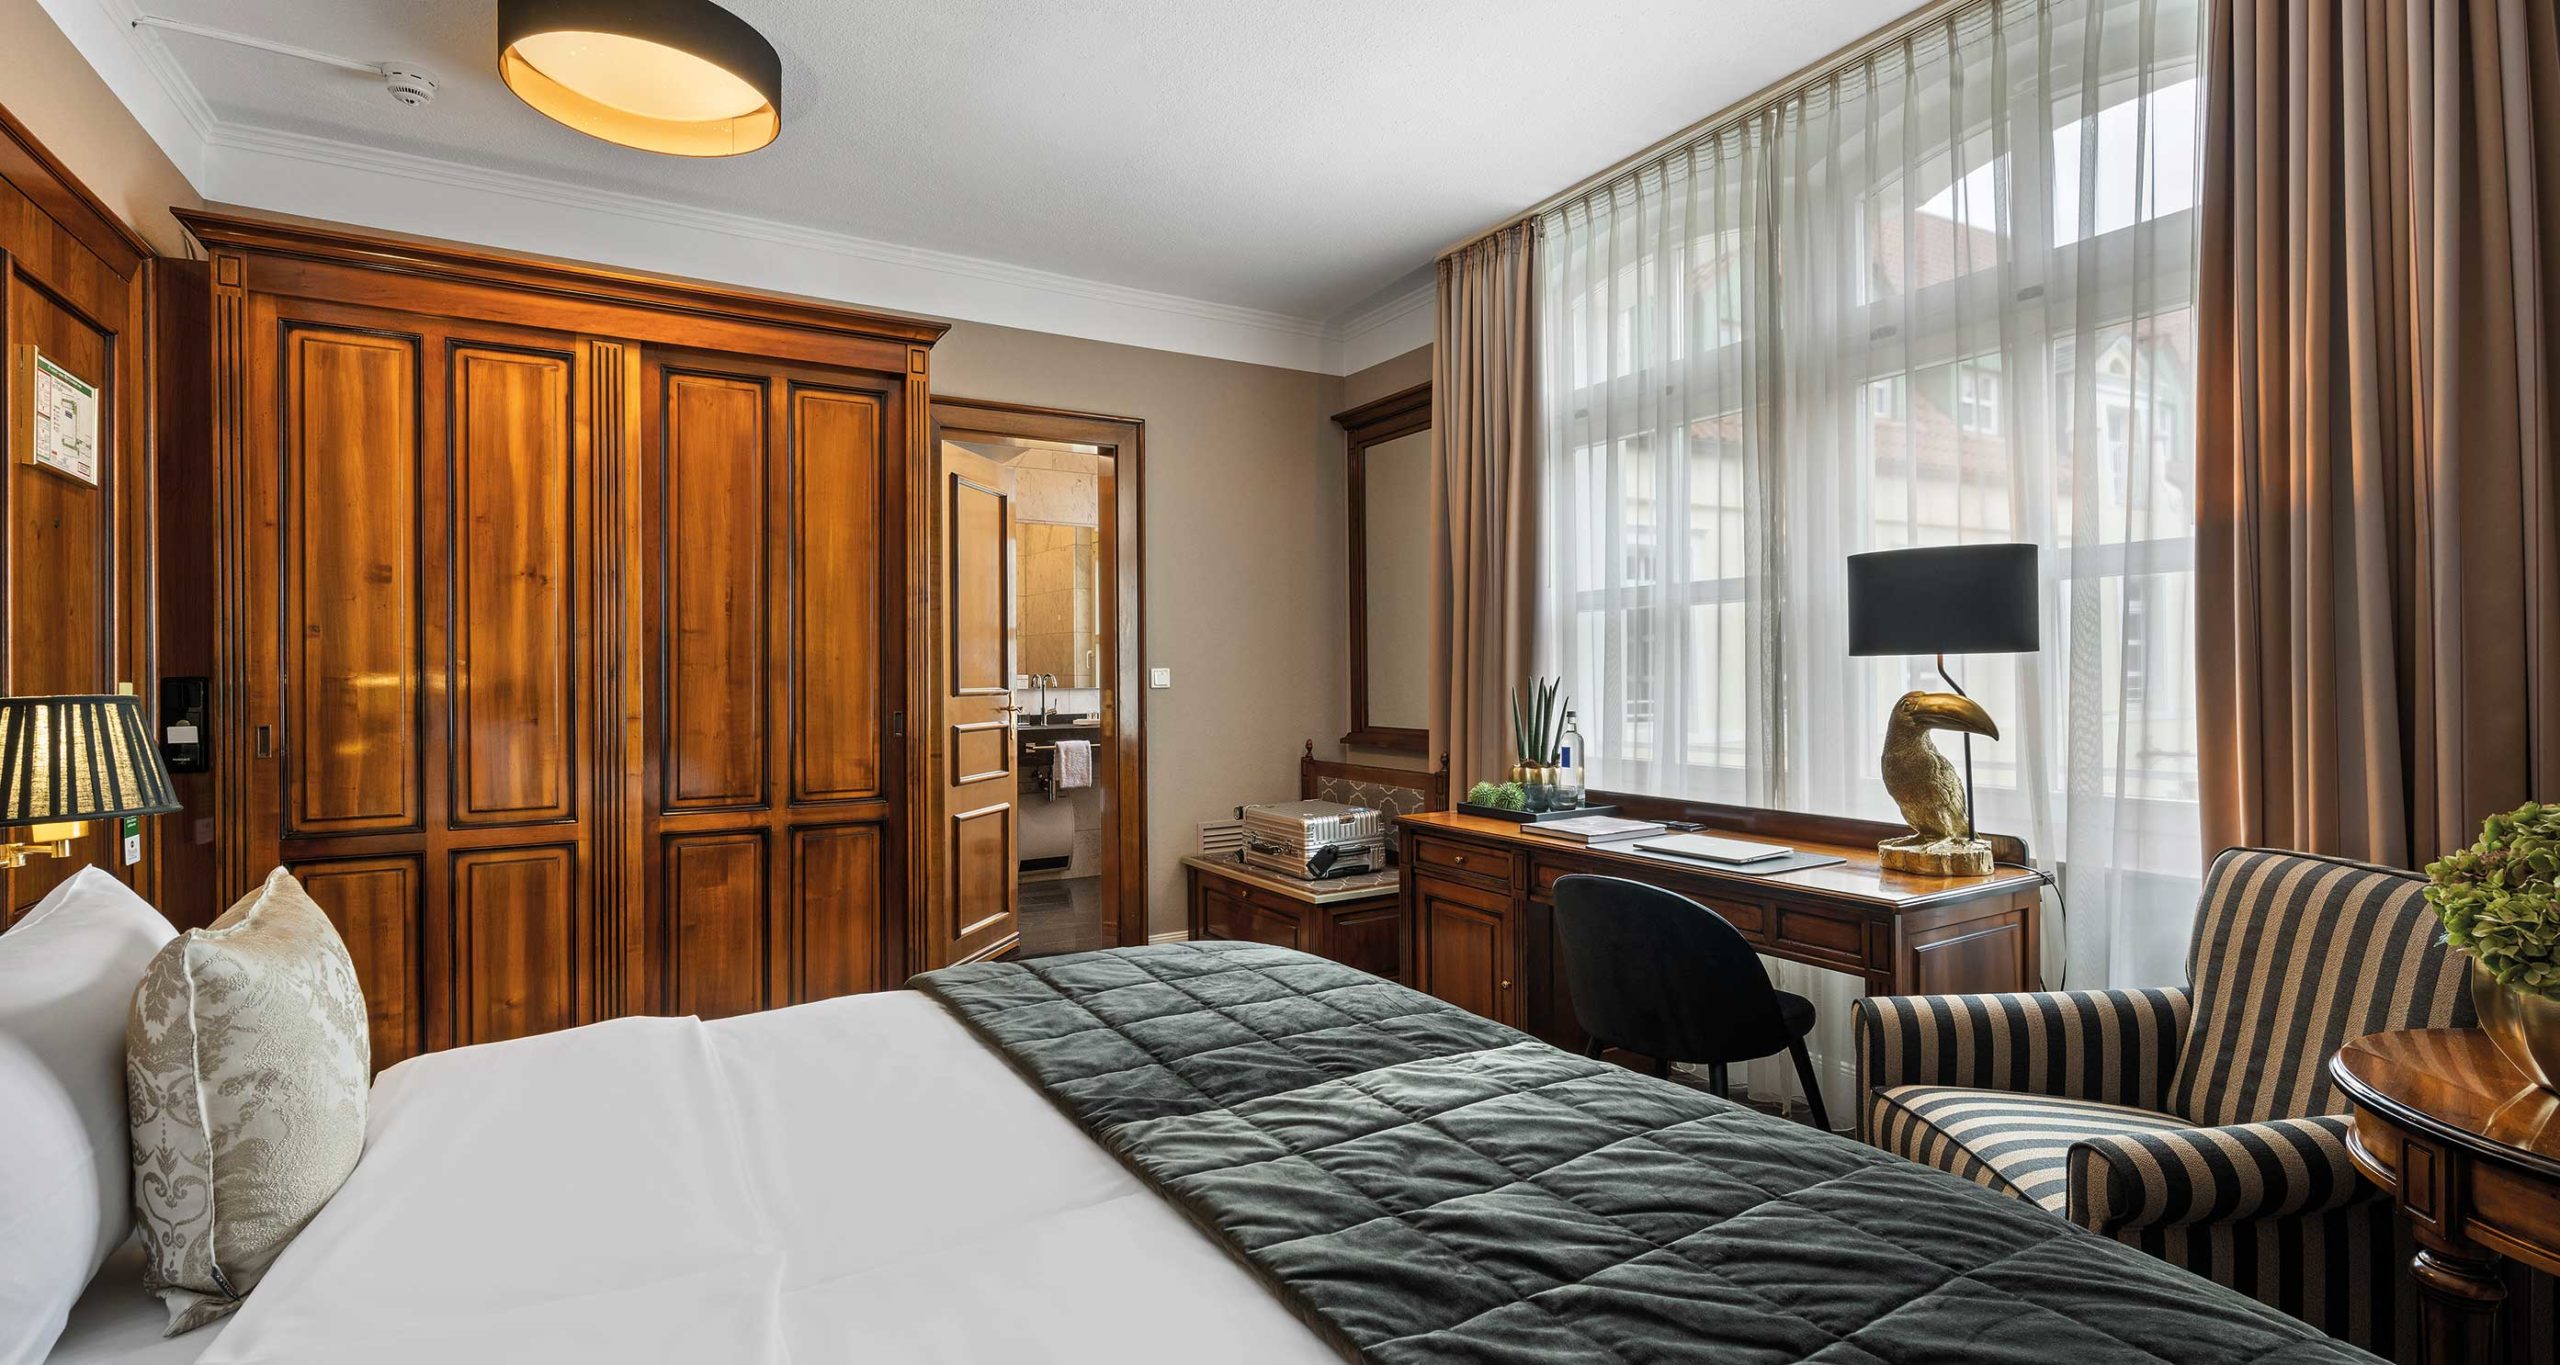 Hotel room classic room at Parkhotel Engelsburg in Recklinghausen